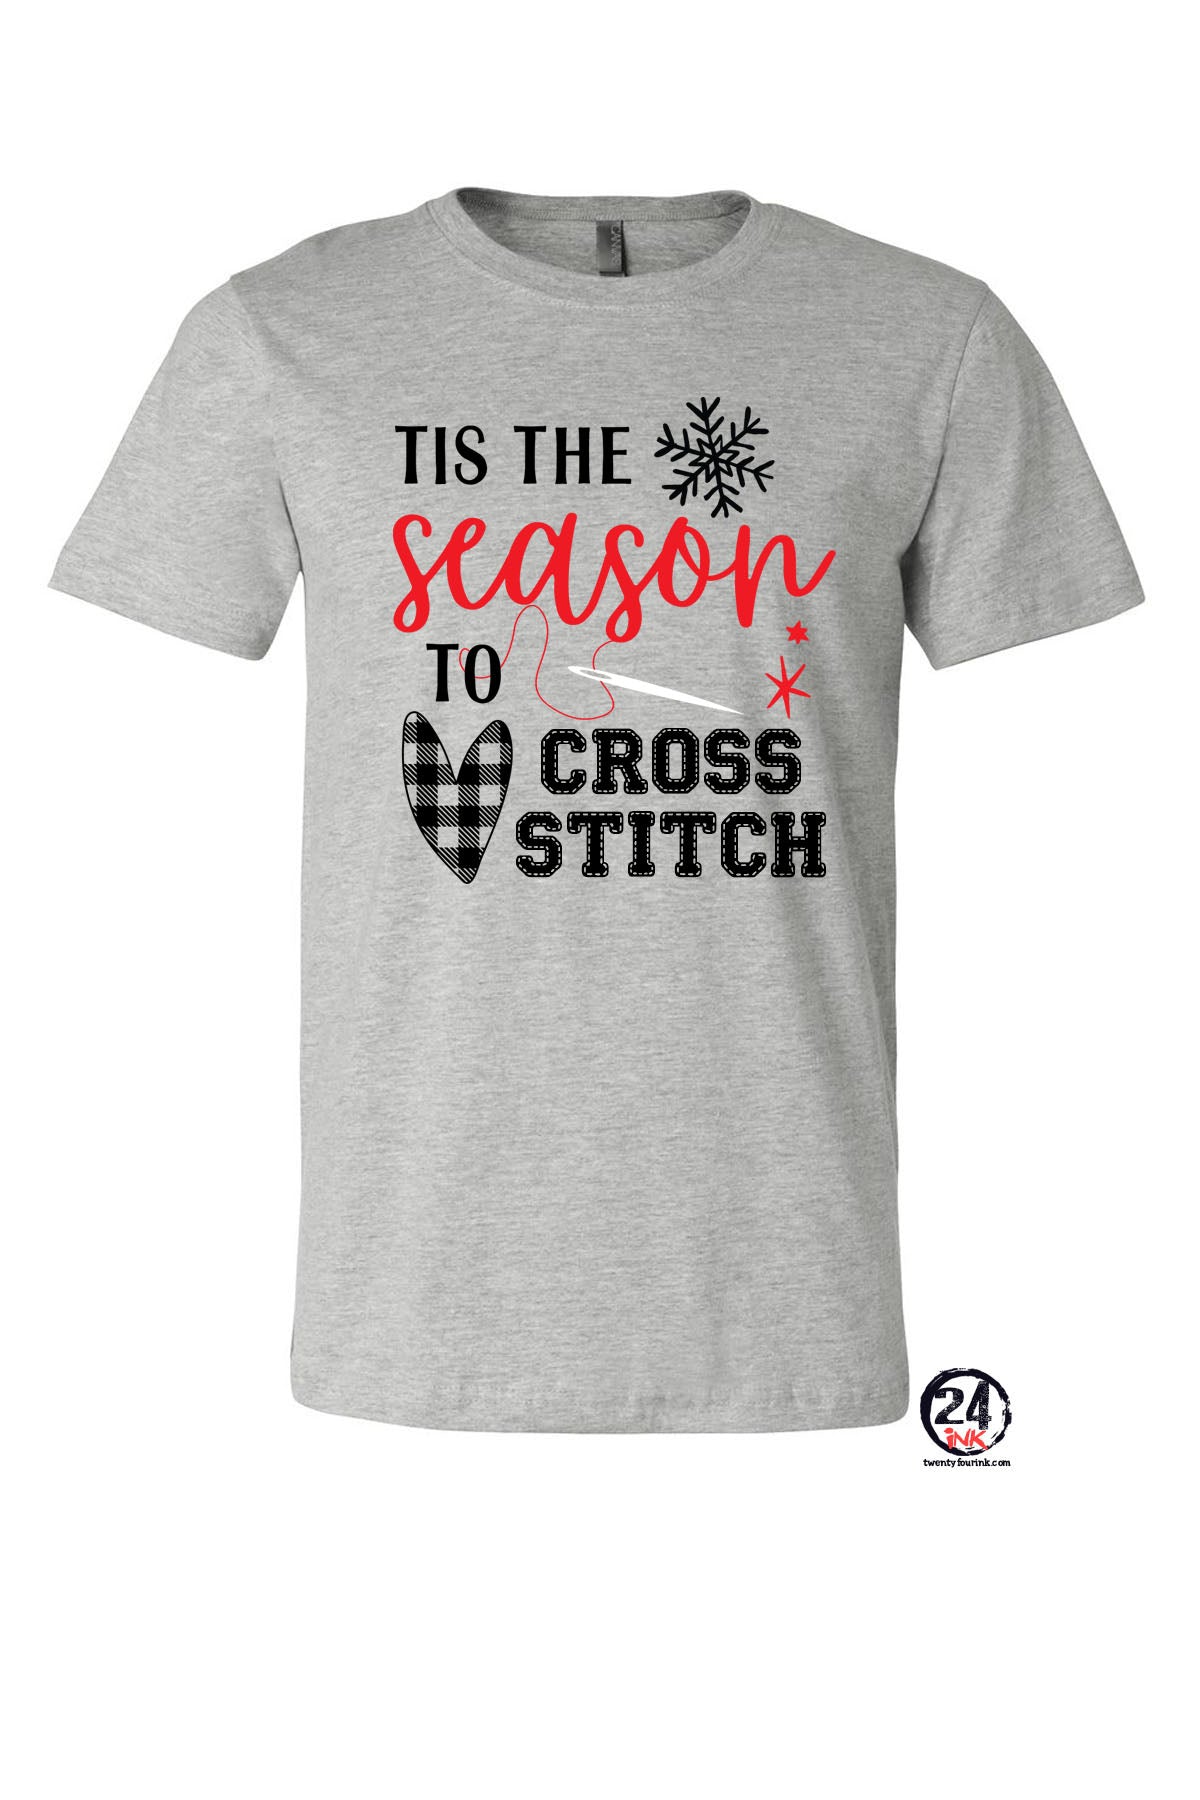 Tis the season to cross stitch T-Shirt